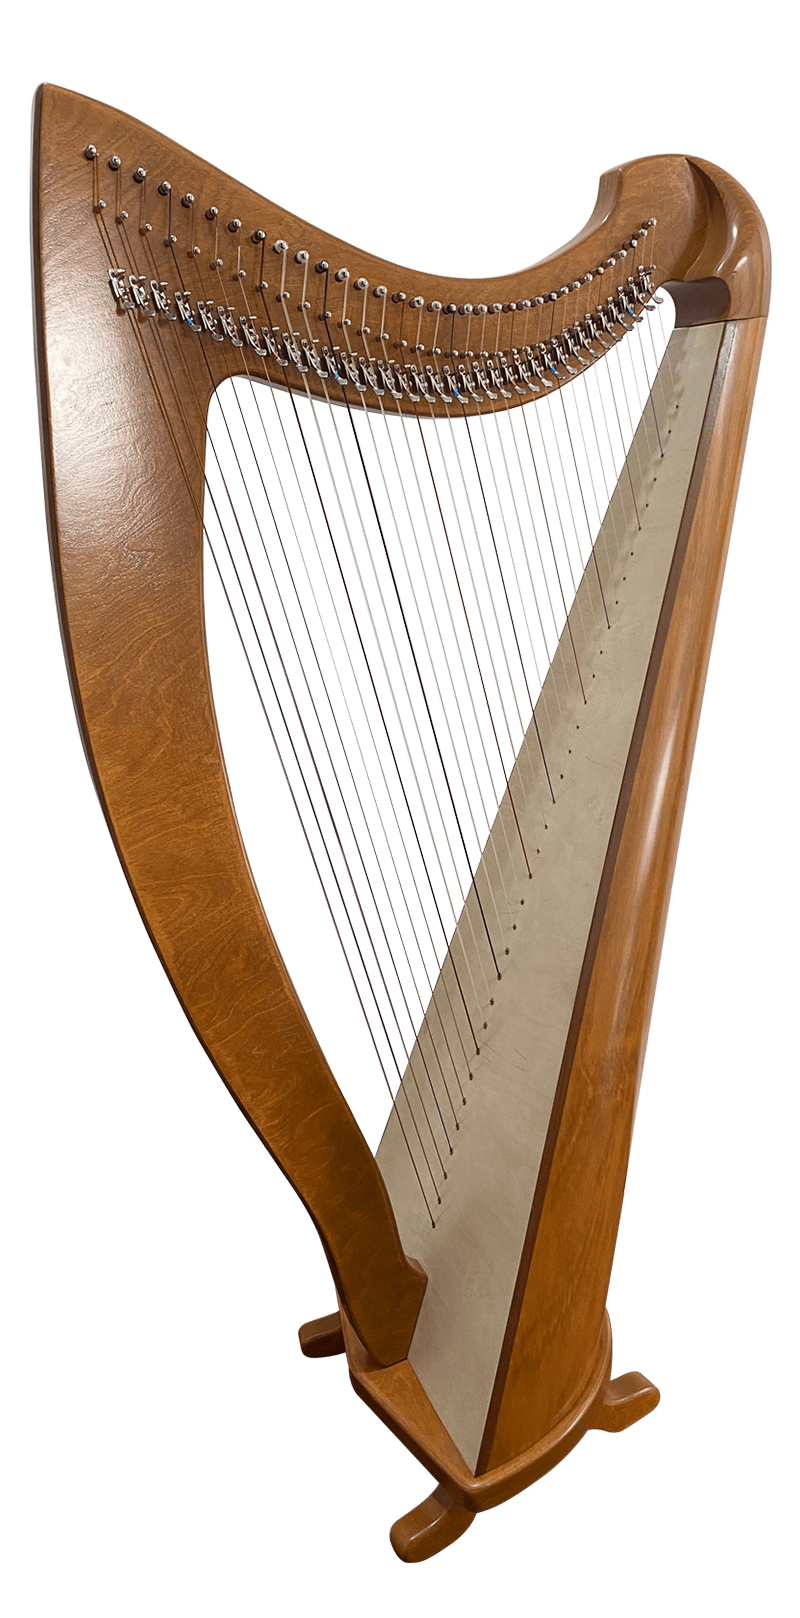 Harps and harps Kookaburra34 med